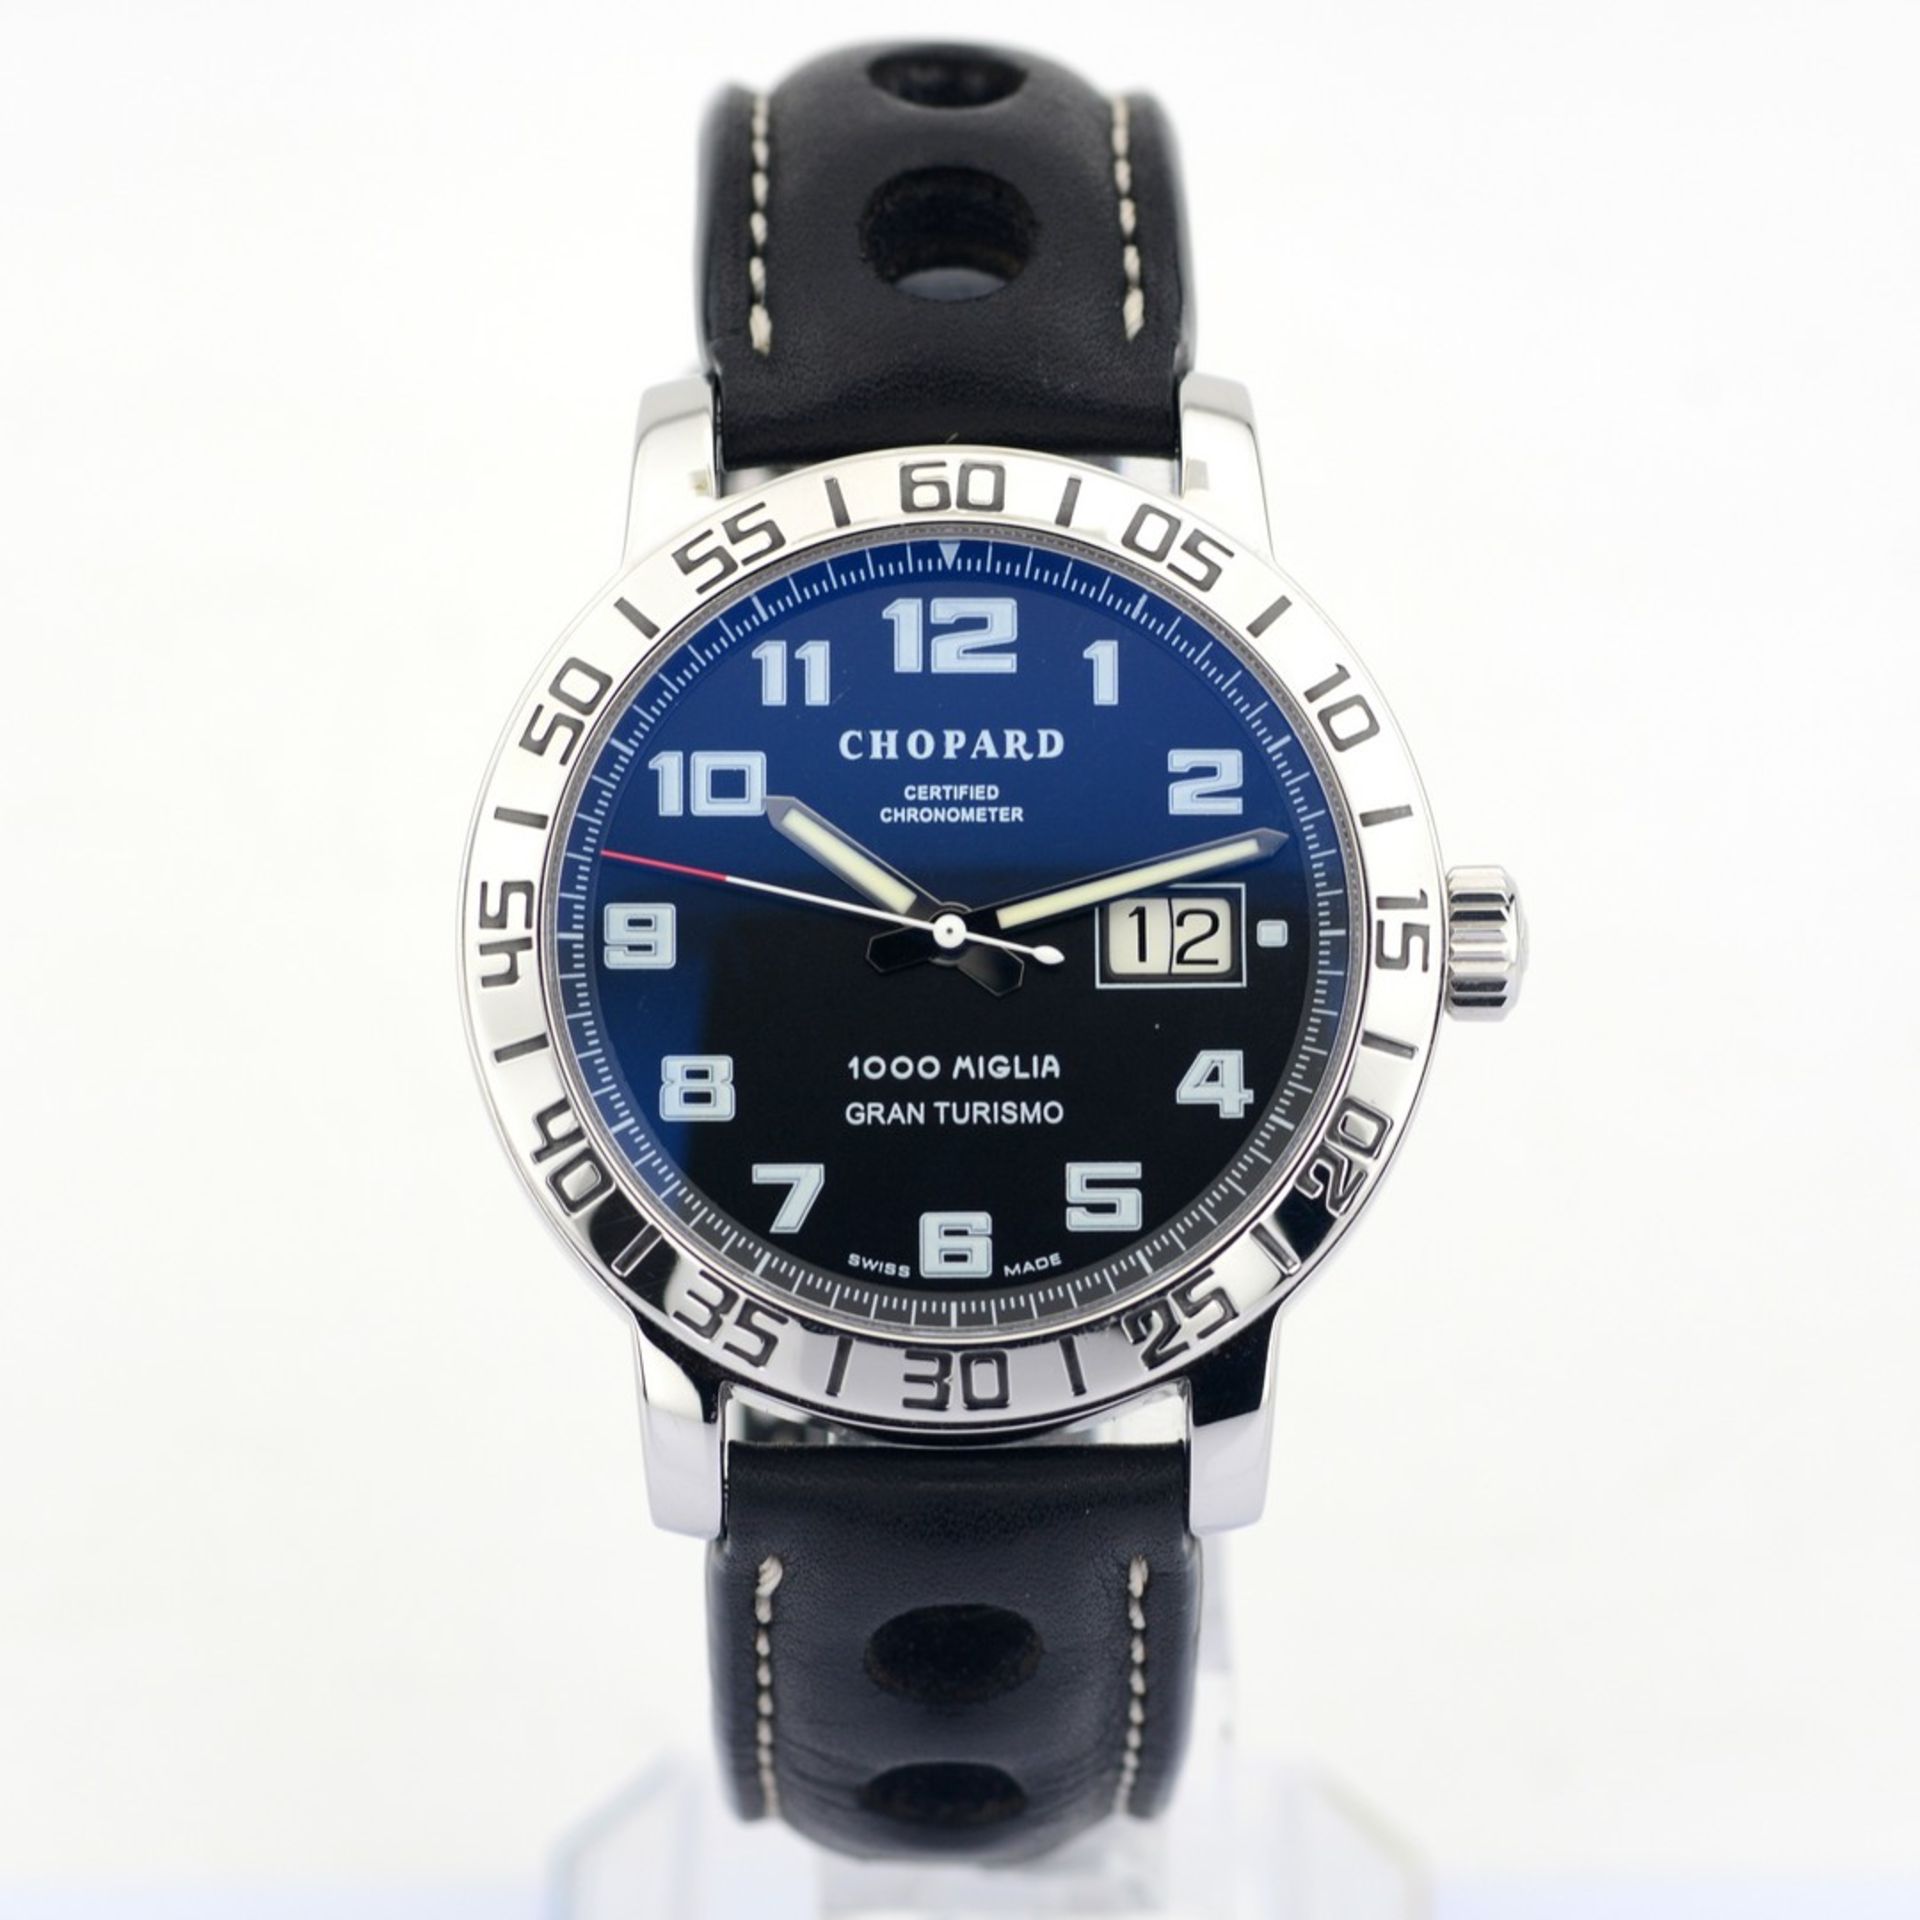 Chopard / 1000 Miglia Grand Turismo Prototype - Gentlemen's Steel Wristwatch - Image 2 of 8